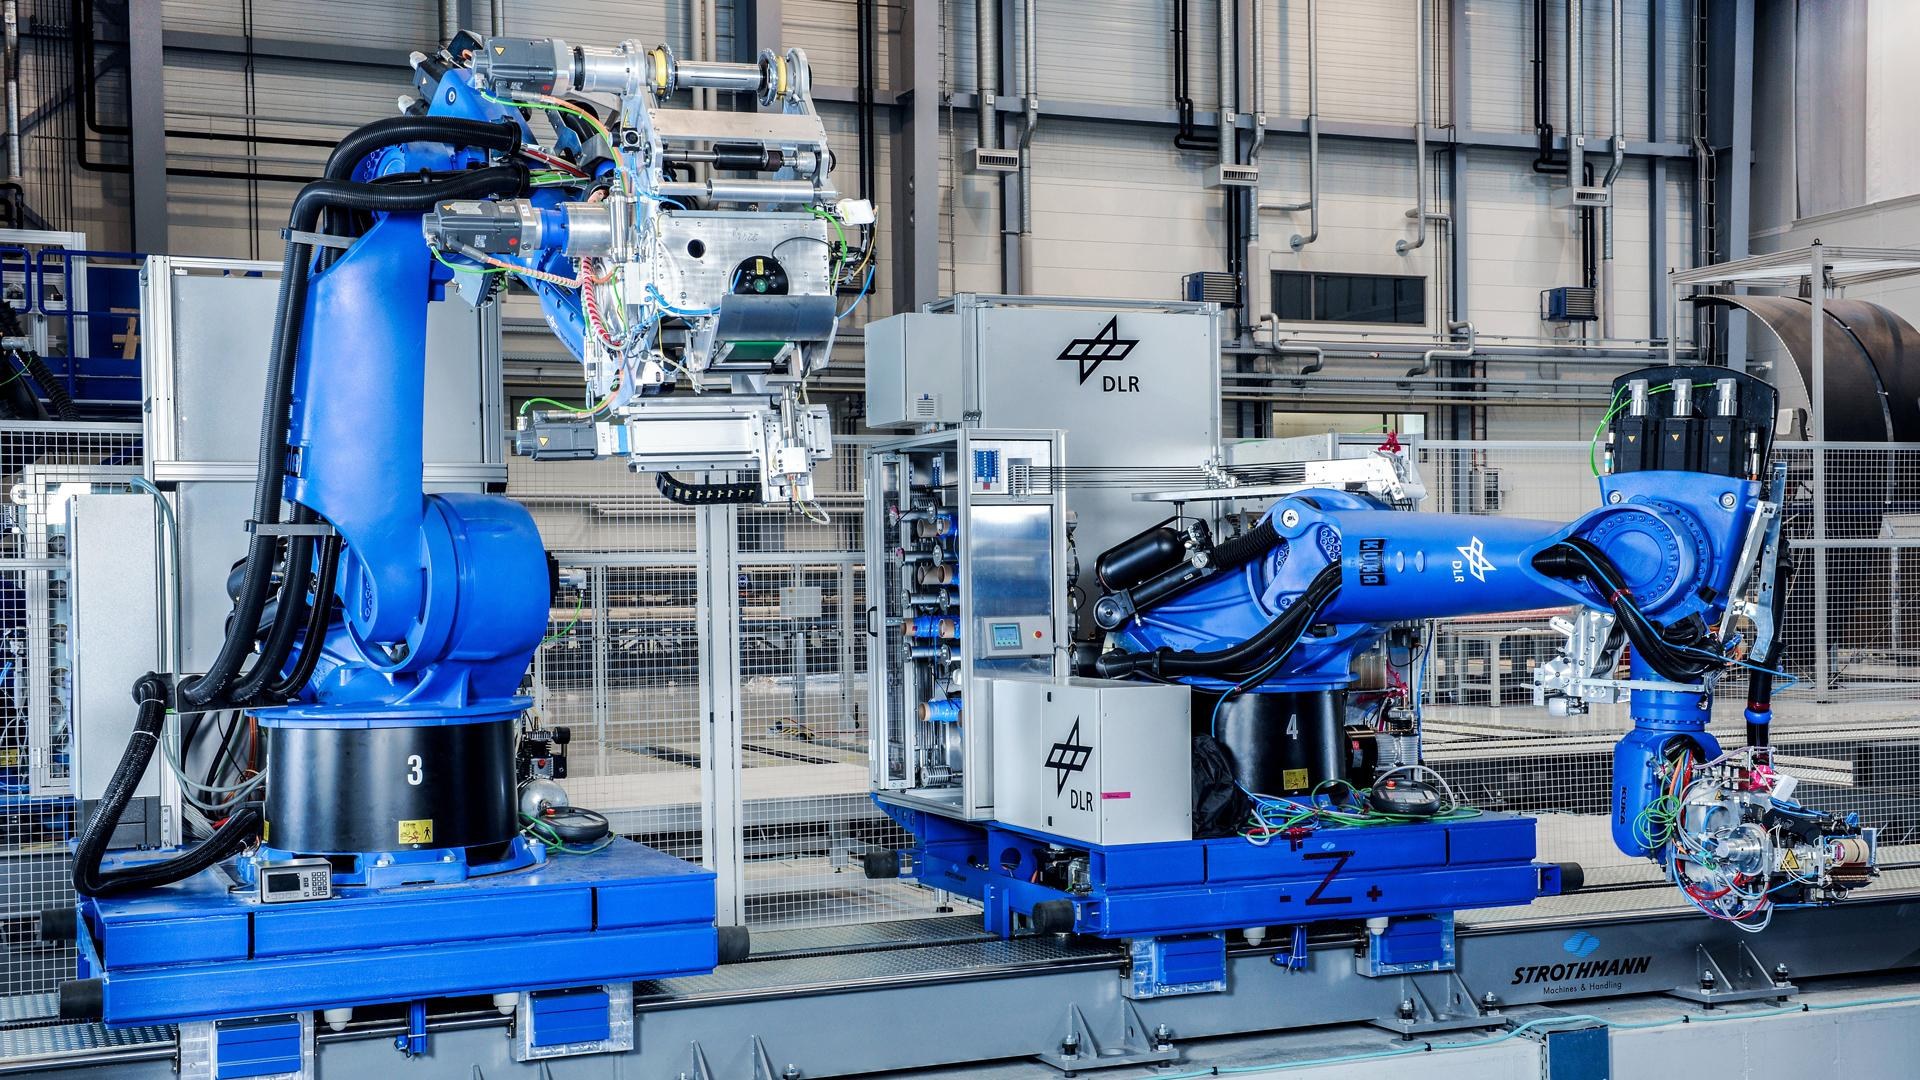 Robot-based manufacturing units